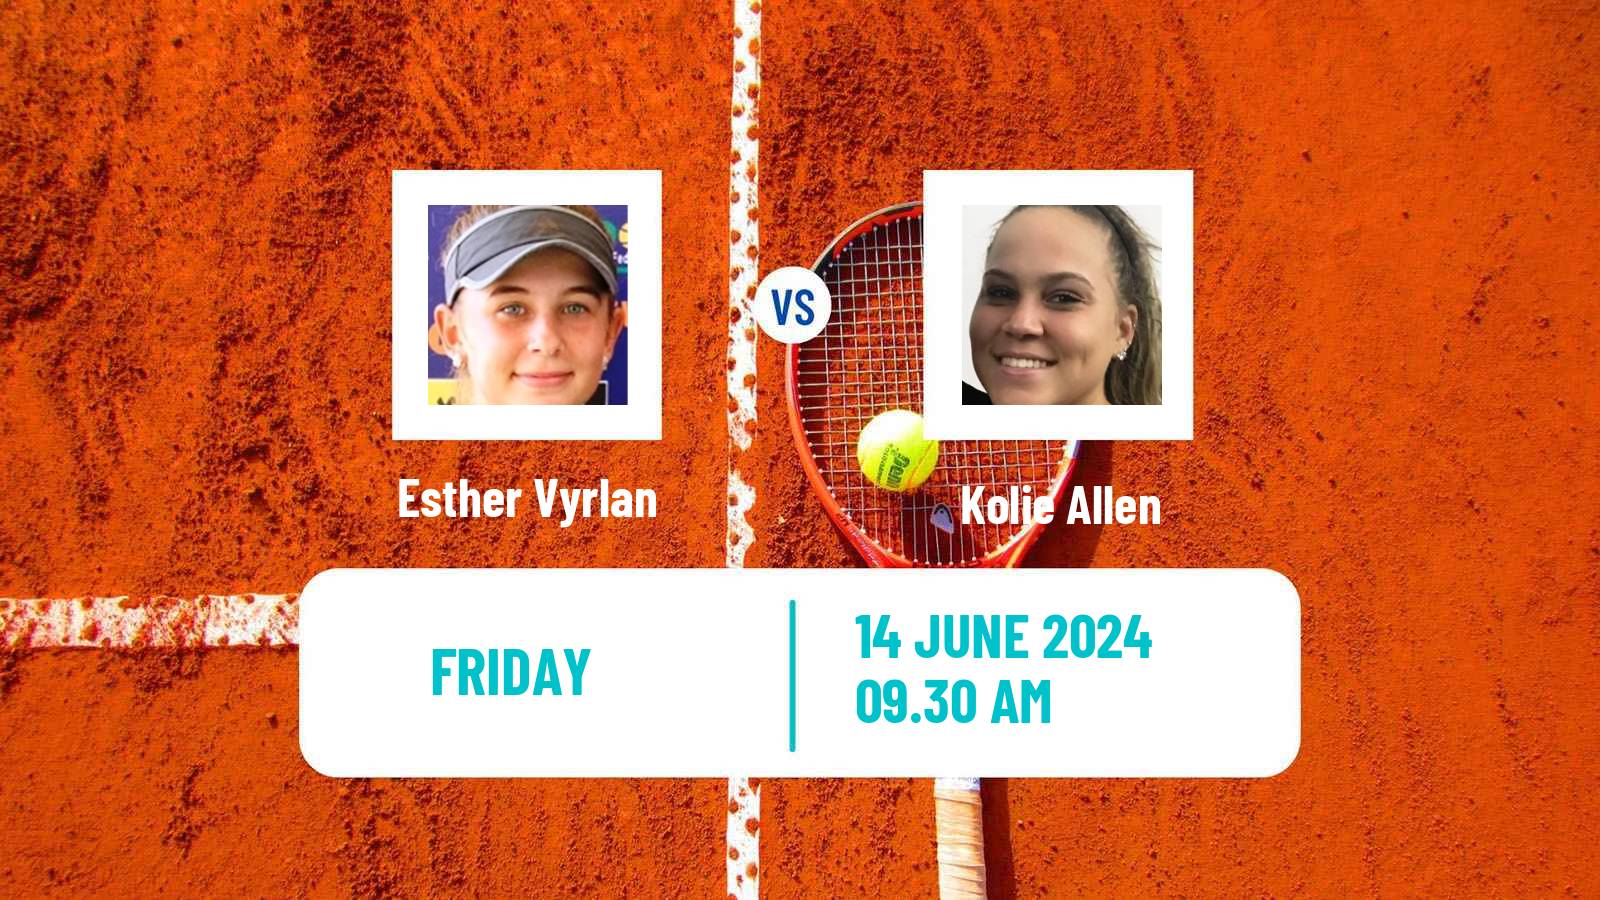 Tennis ITF W15 Santo Domingo 2 Women Esther Vyrlan - Kolie Allen